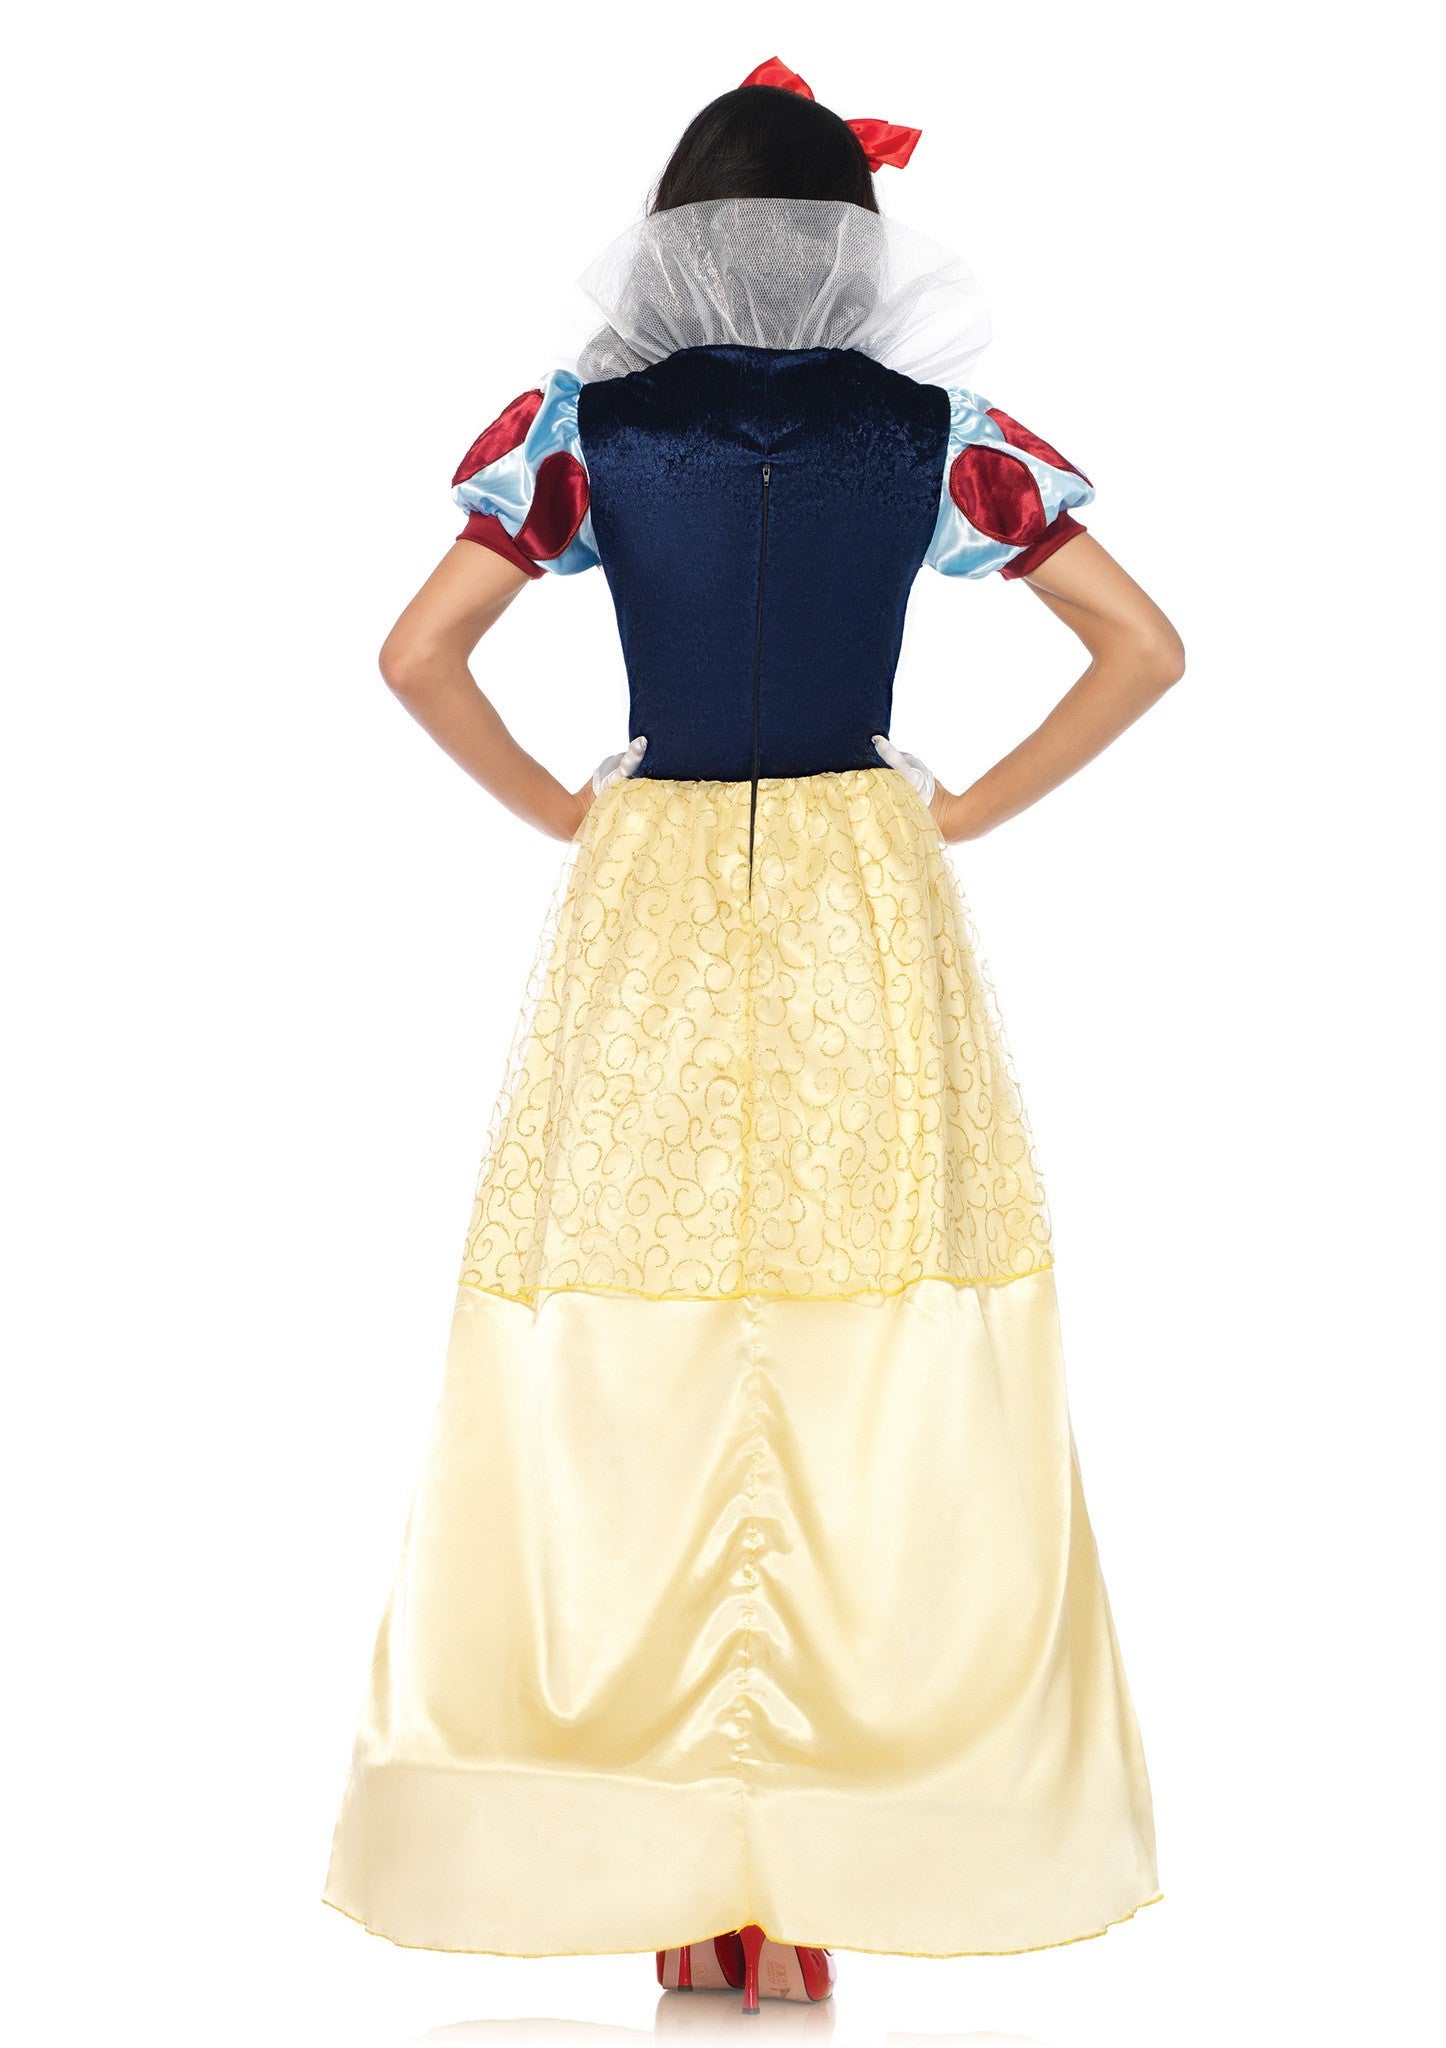 Costume - Deluxe Snow White Costume